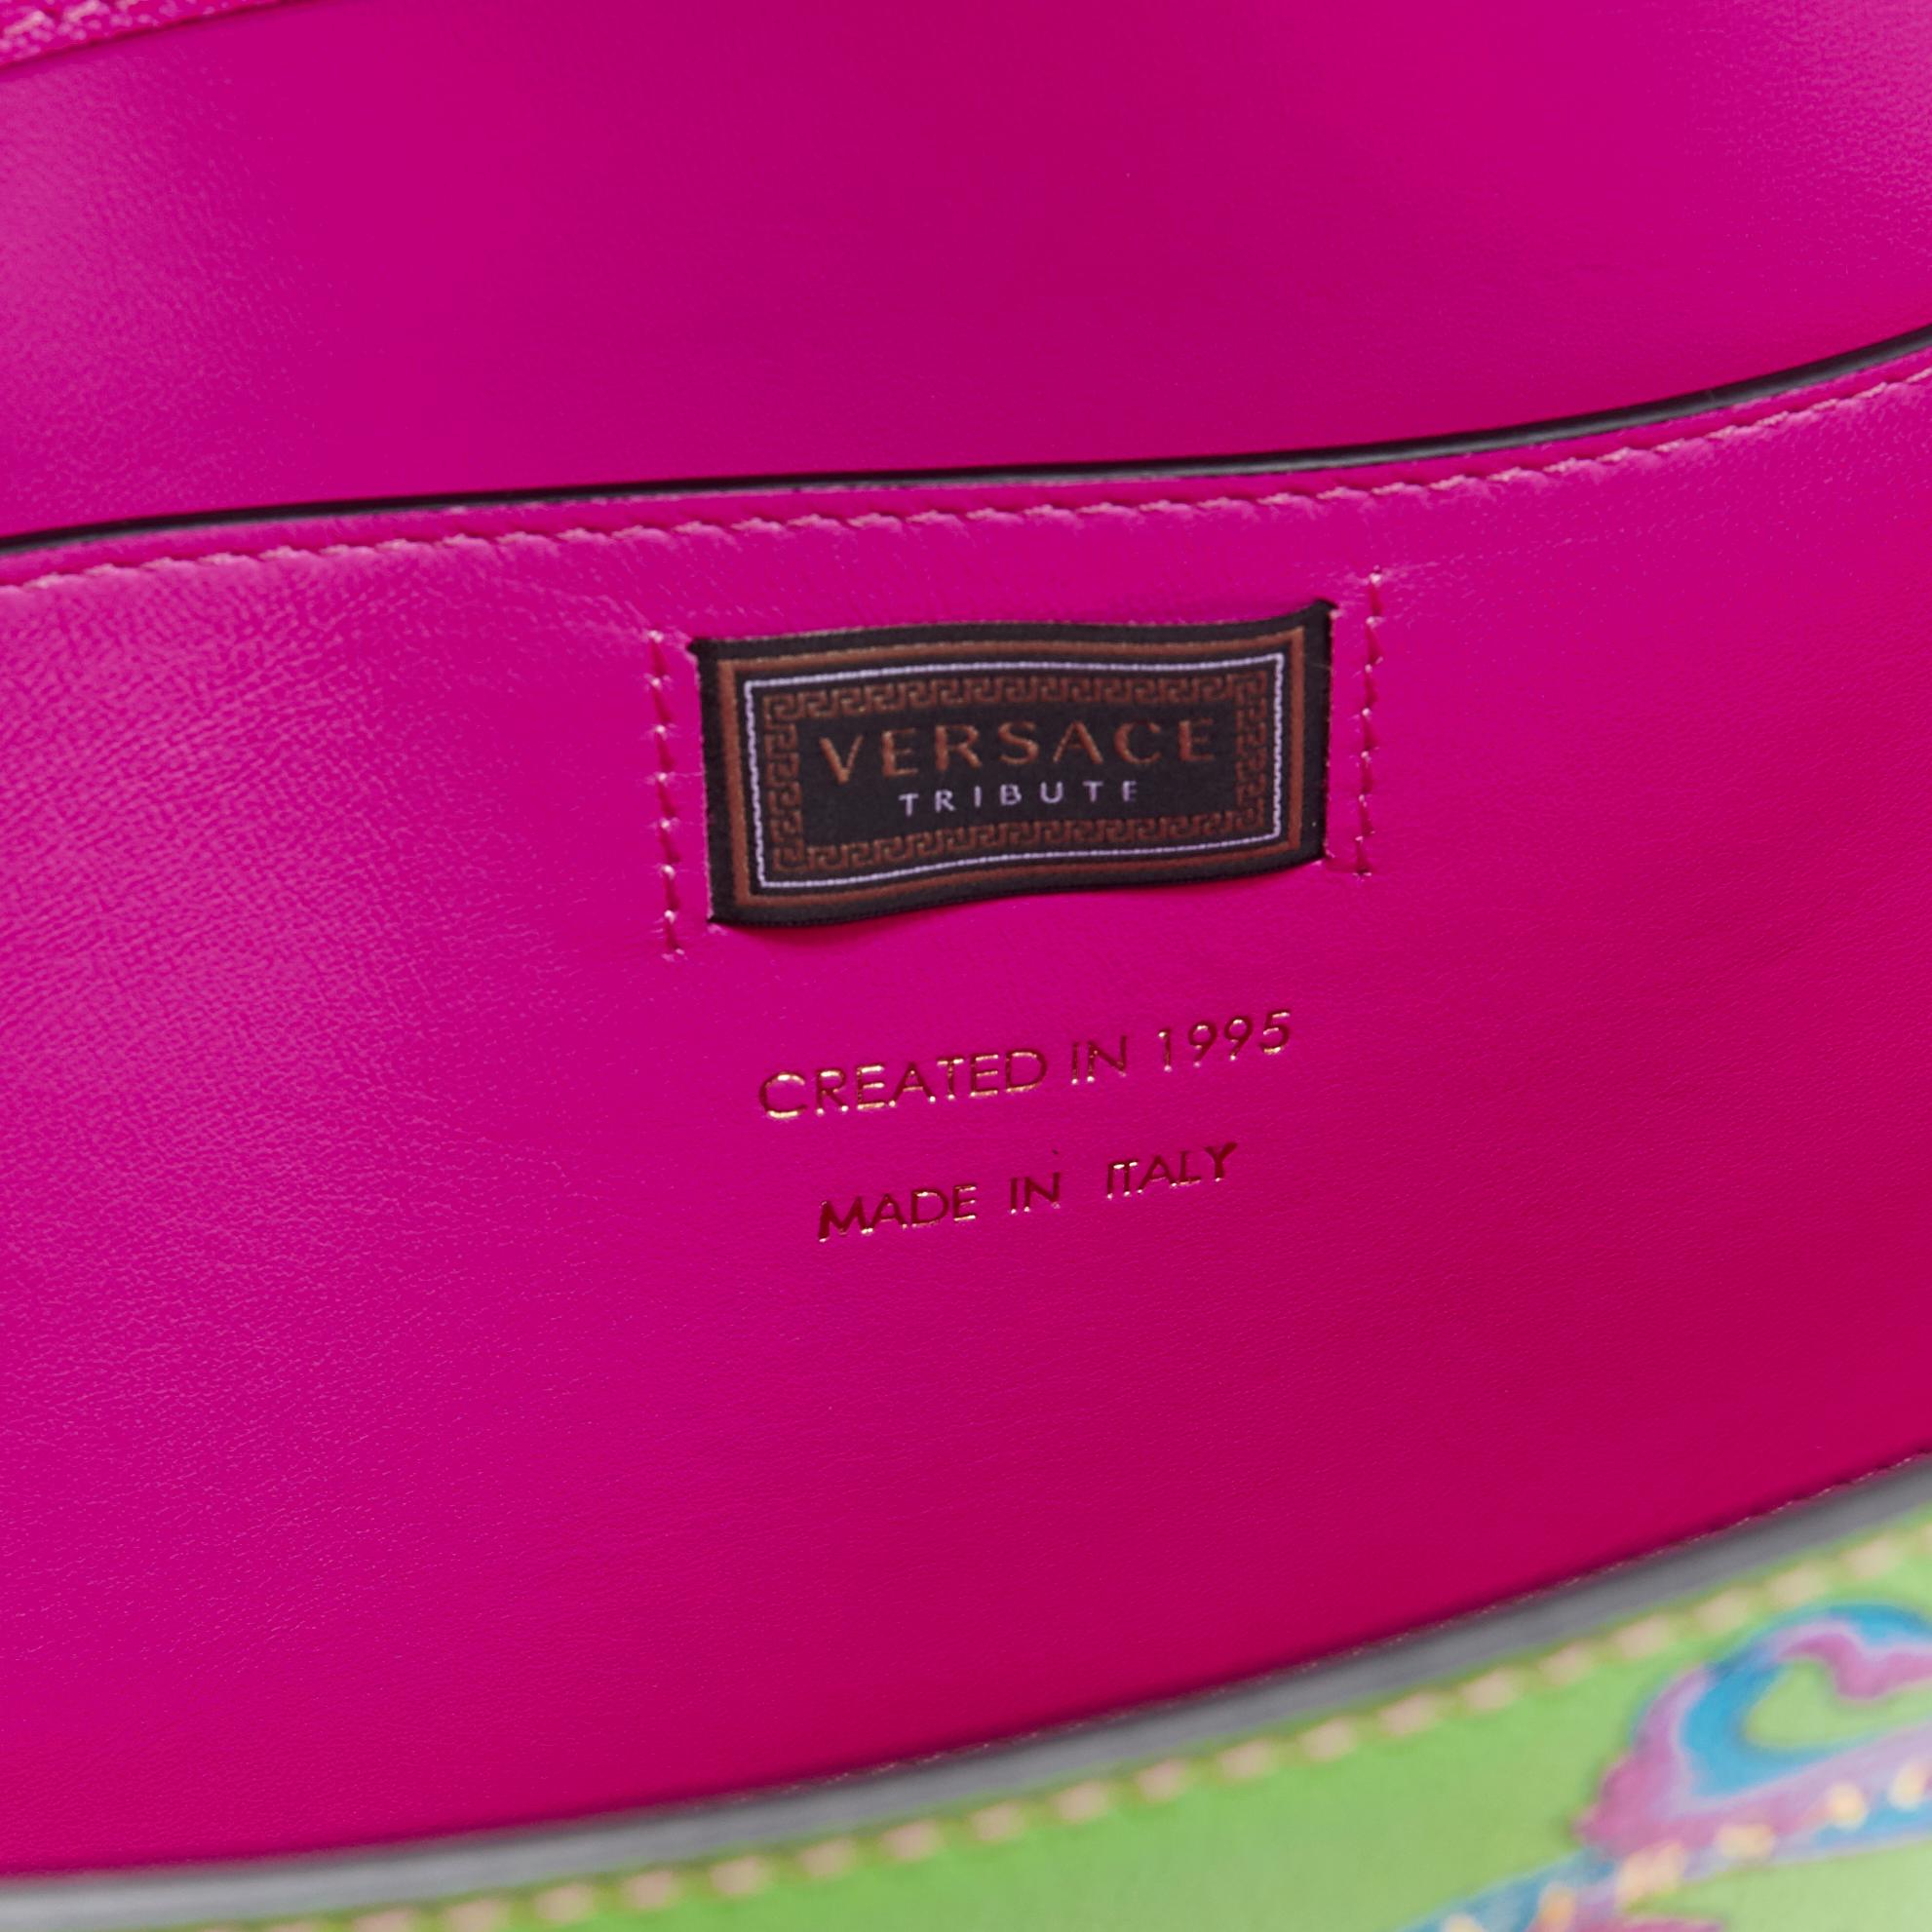 new VERSACE Diana Tribute Technicolor Baroque print top handle Kelly satchel bag 4